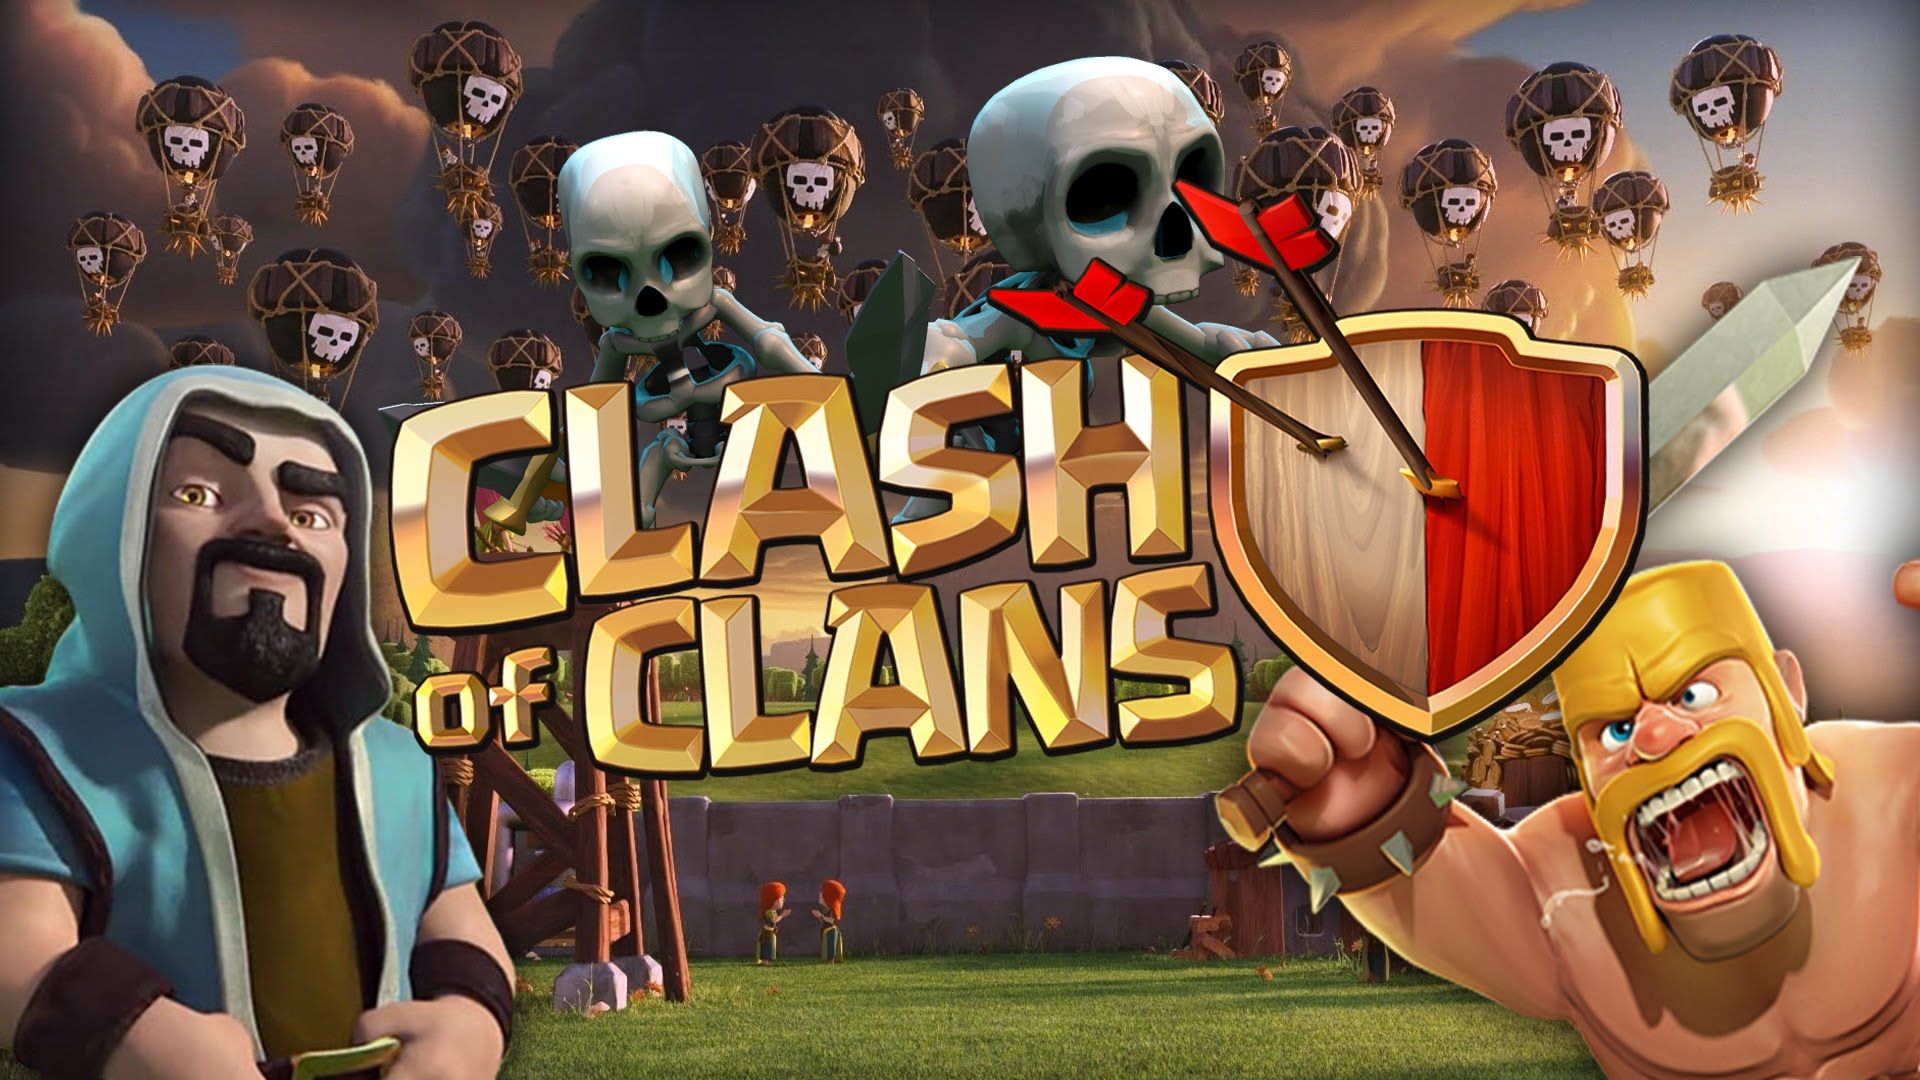 Game of clans. Клэш оф кланс. Игра клеш оф кланс. Игра игра Clash of Clans. 2 Игра Clash of Clans.